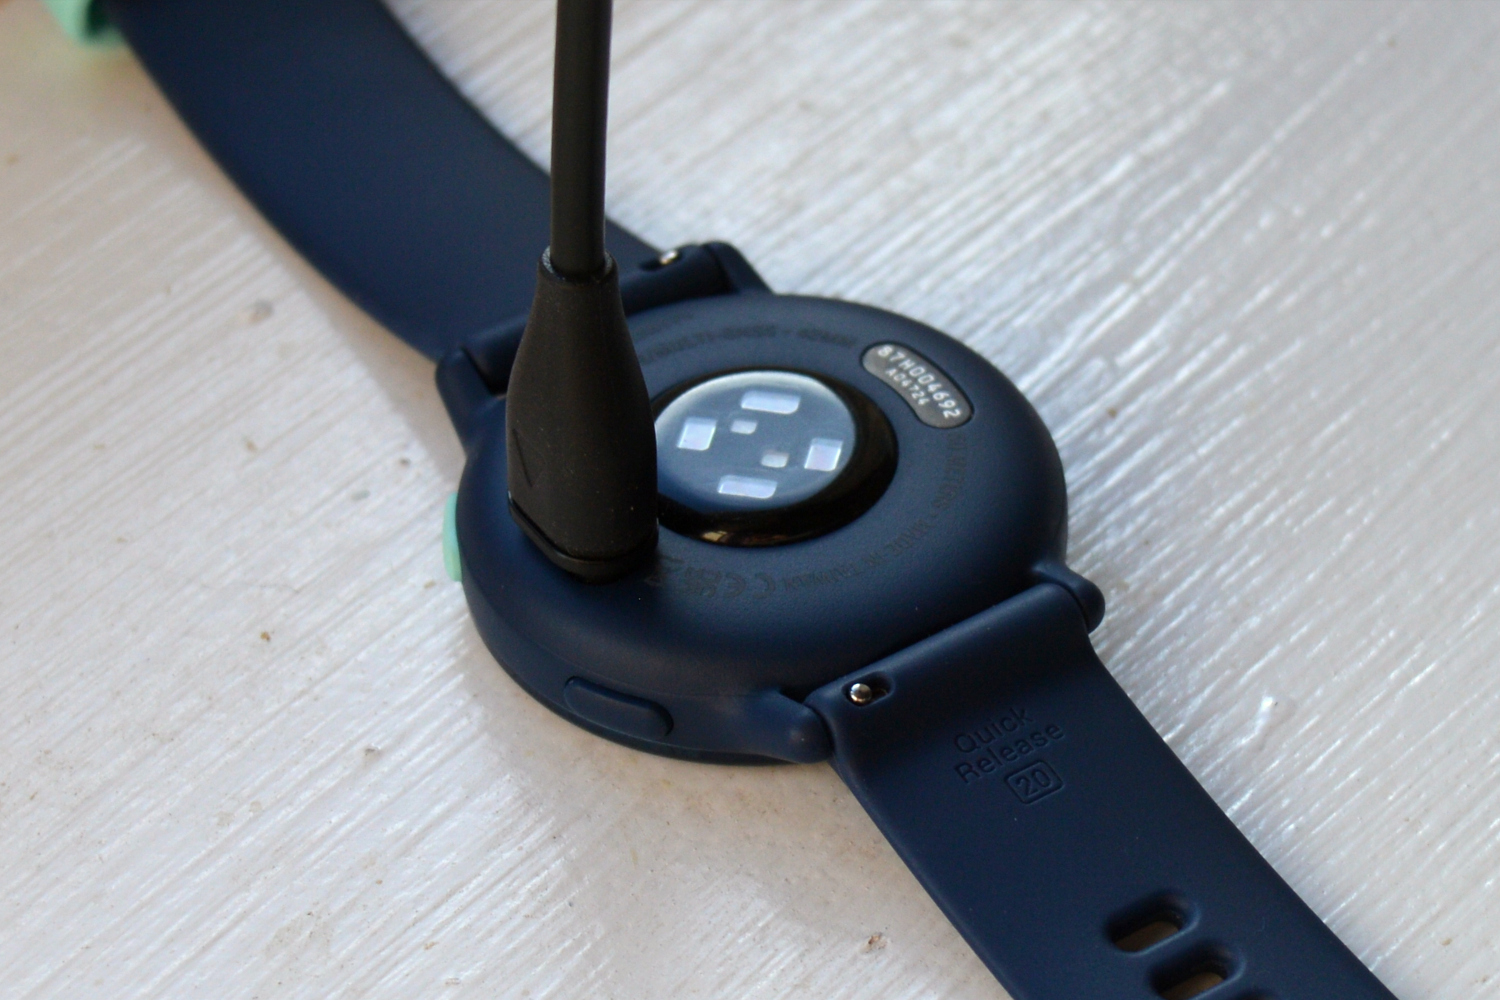 Garmin Vivoactive 5 Review: Apple Watch SE Gets a Run for Its Money - CNET